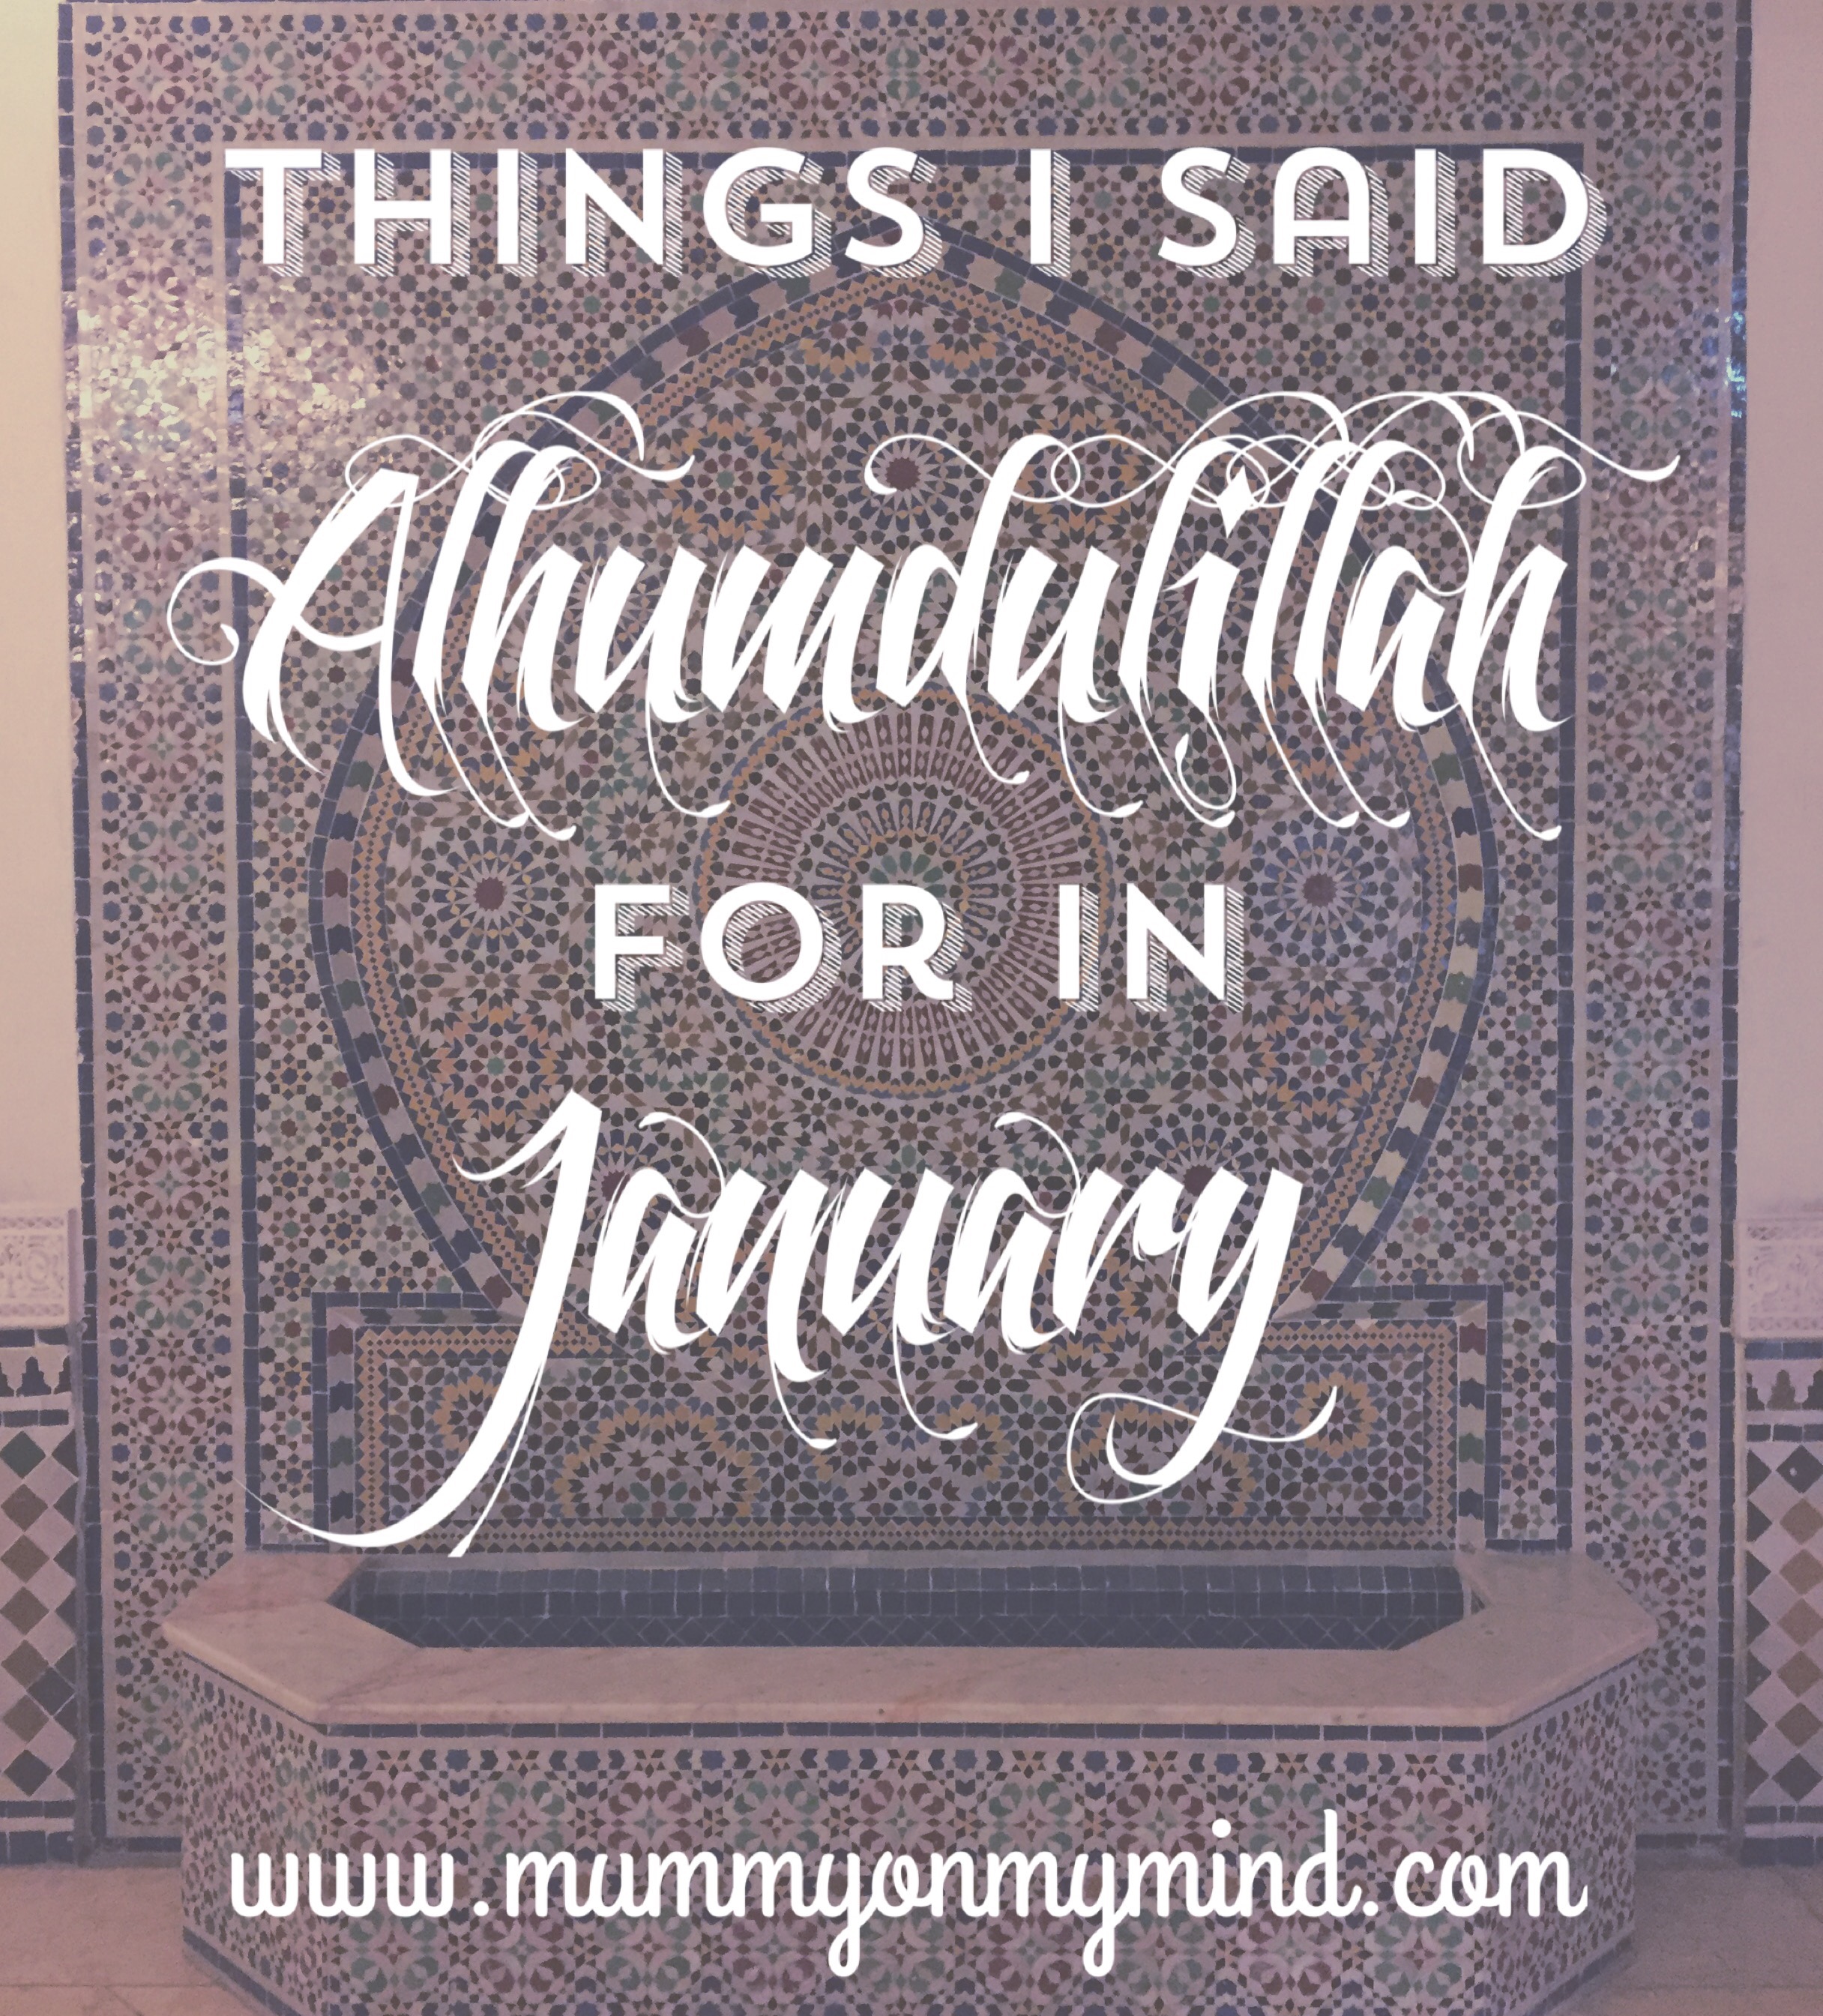 Things I said Alhumdulillah for in January 2016…